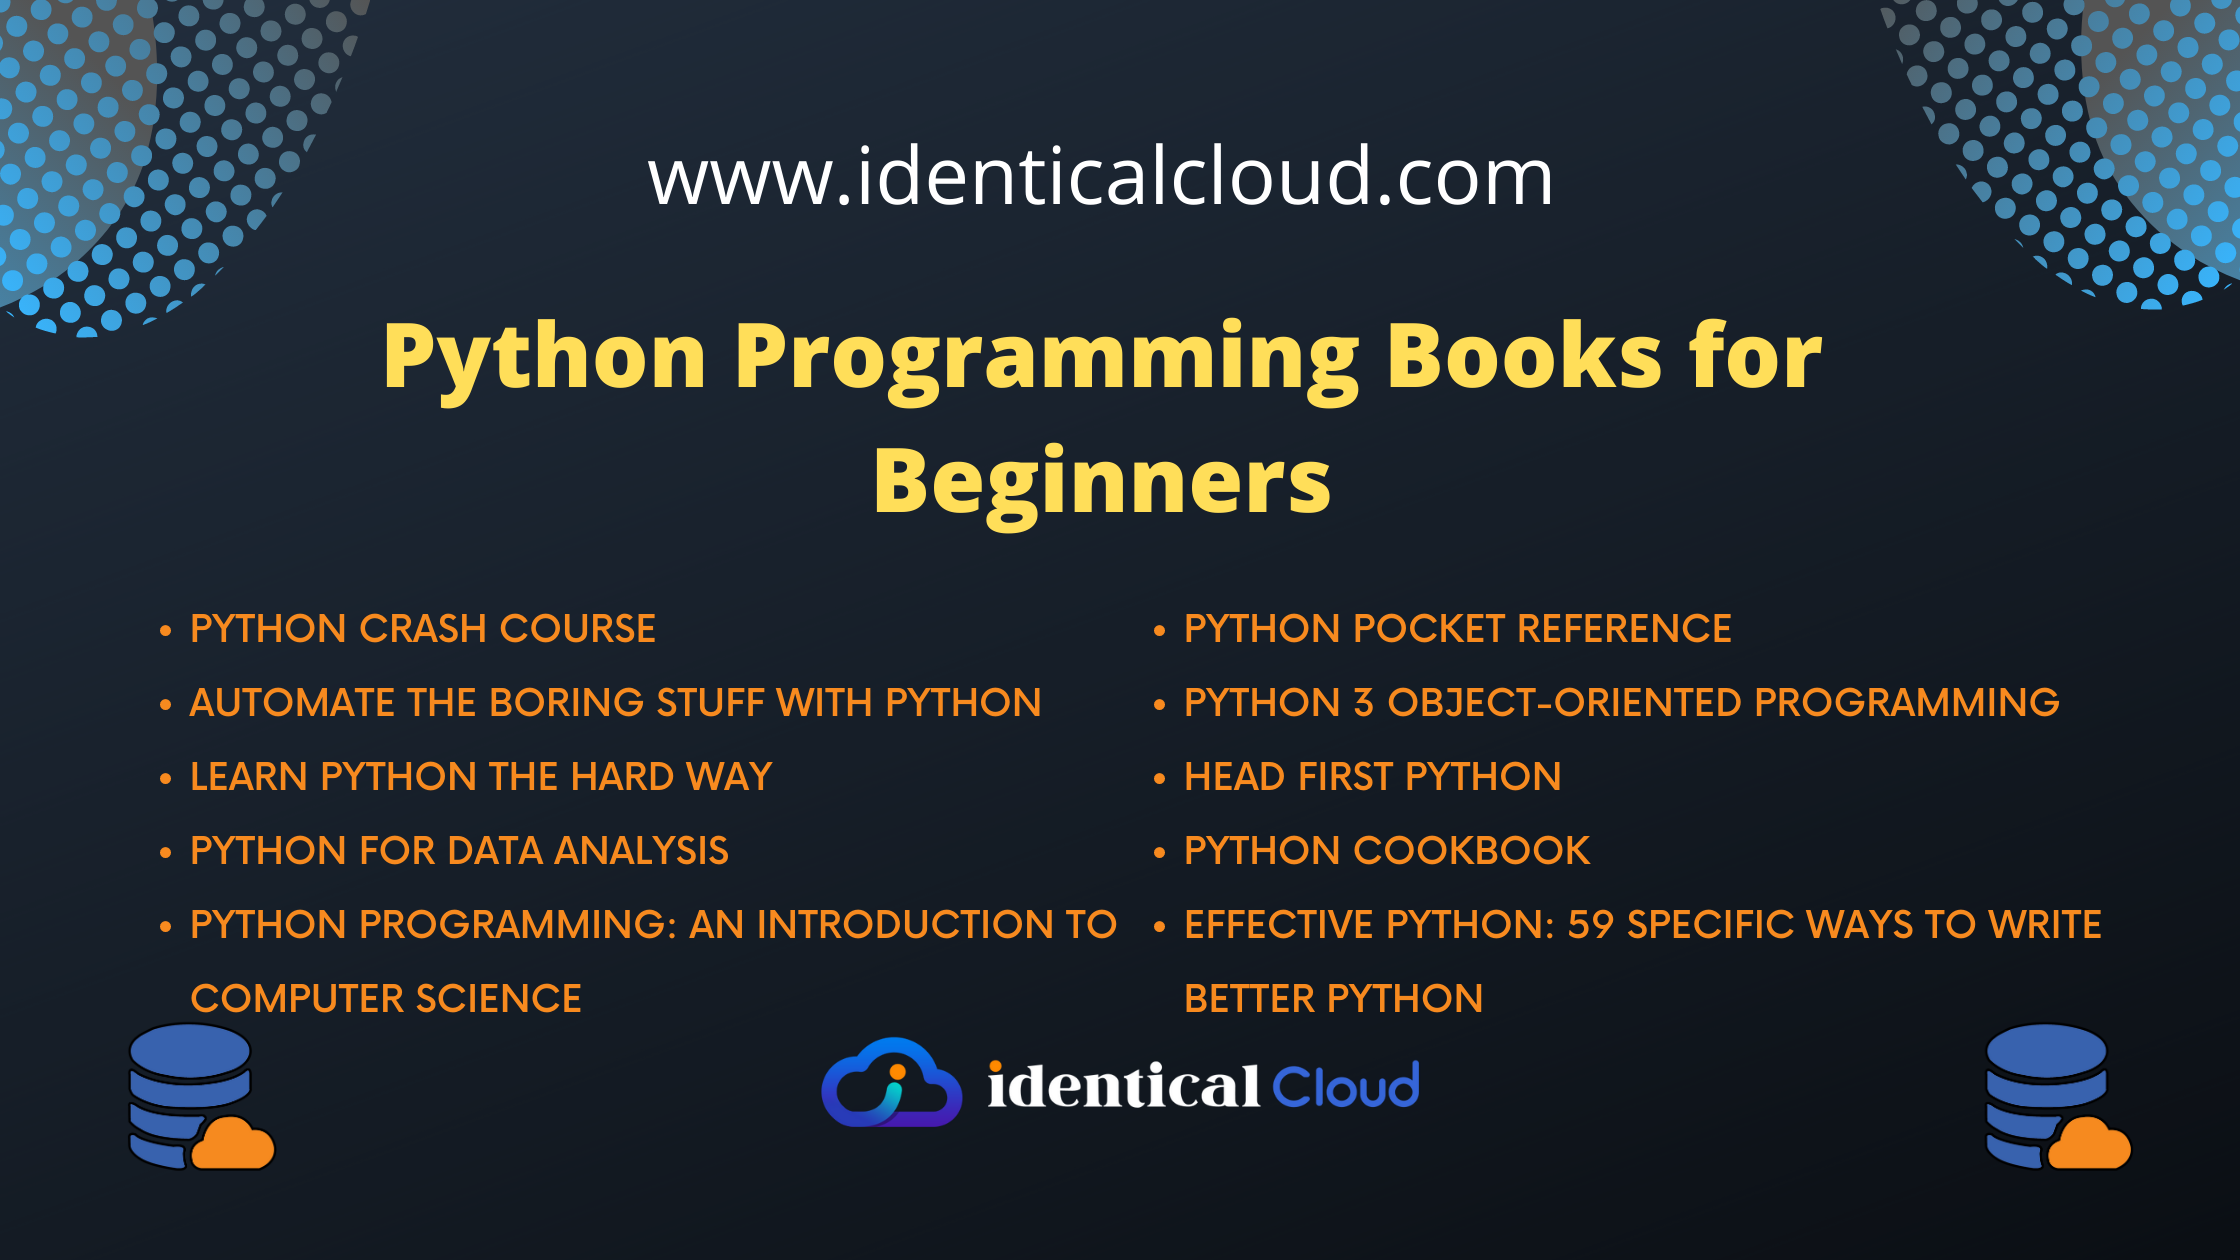 Python Programming Books for Beginners - identicalcloud.com